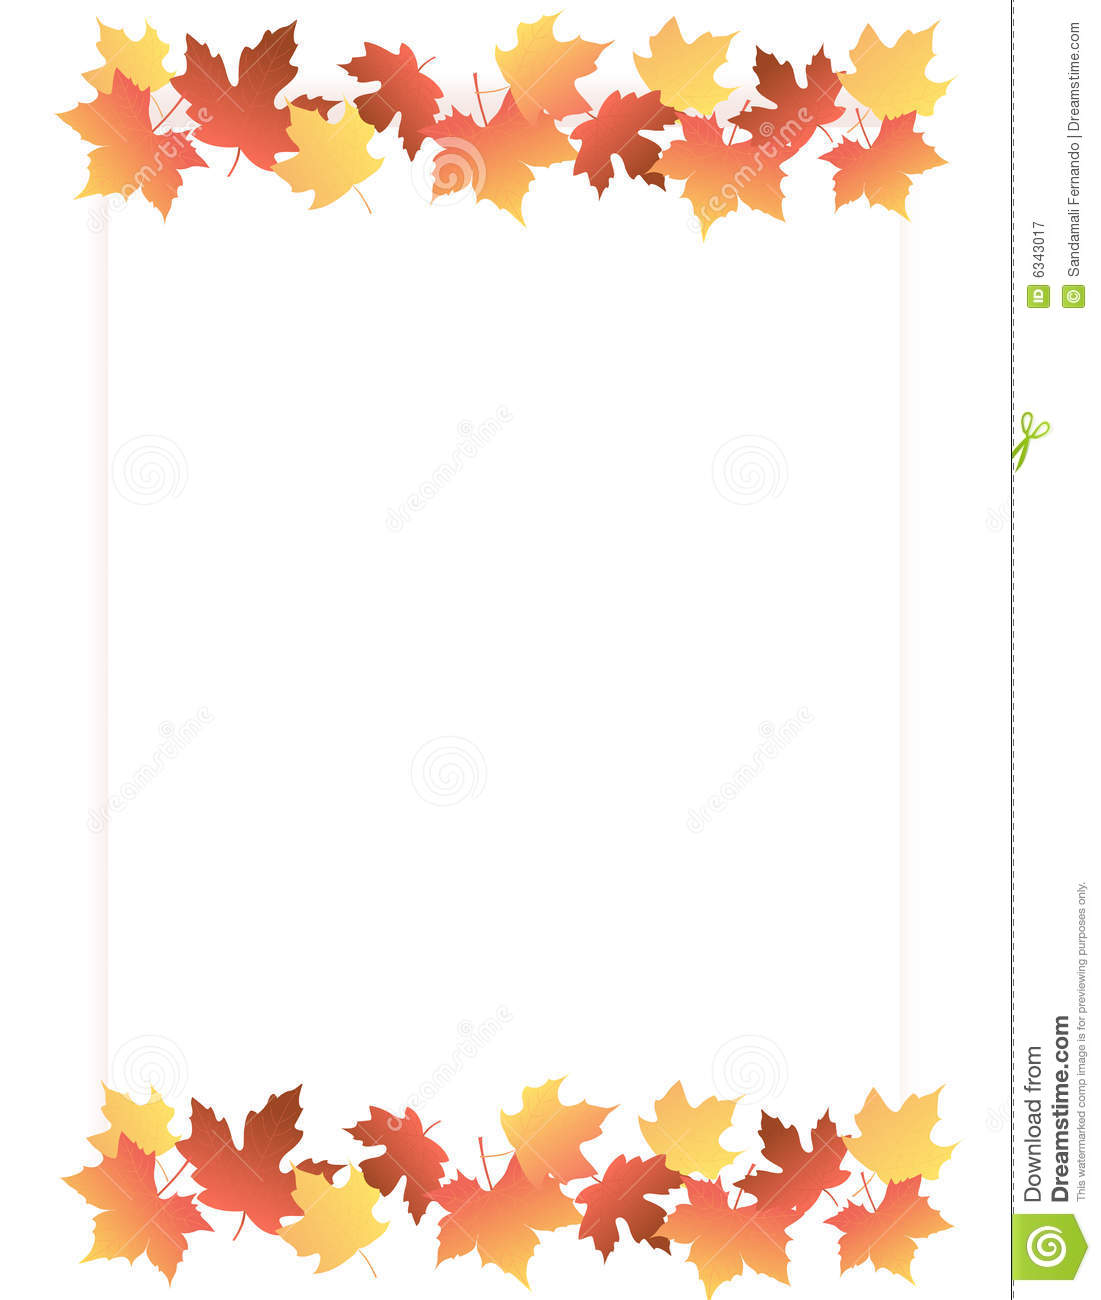 Maple Border   Autumn Leaves Royalty Free Stock Photography   Image